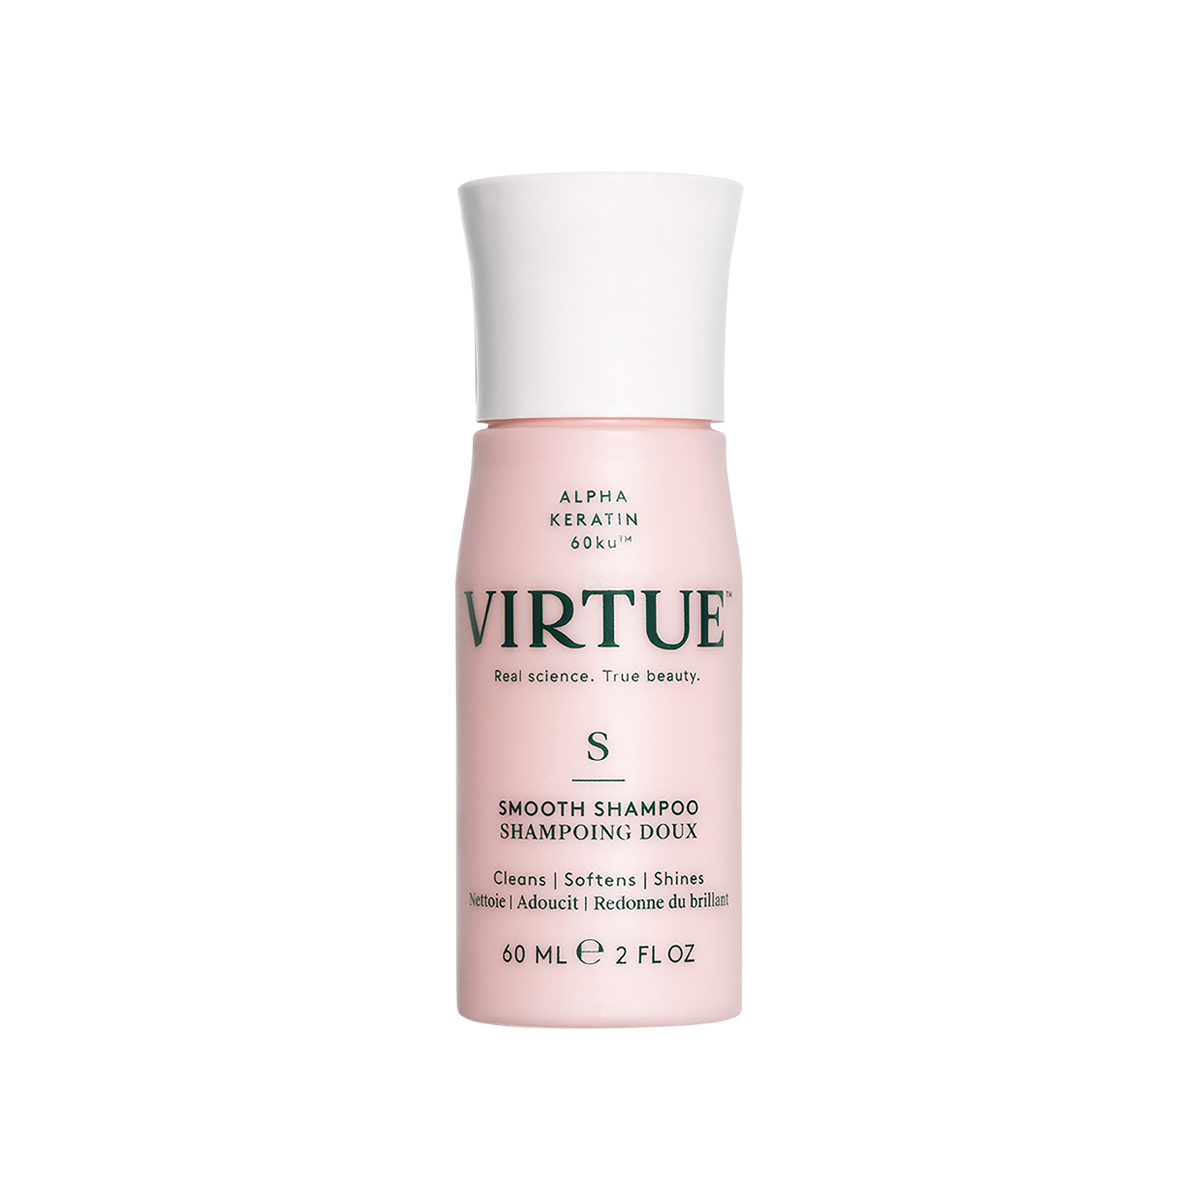 Virtue - Smooth Shampoo Travel Size